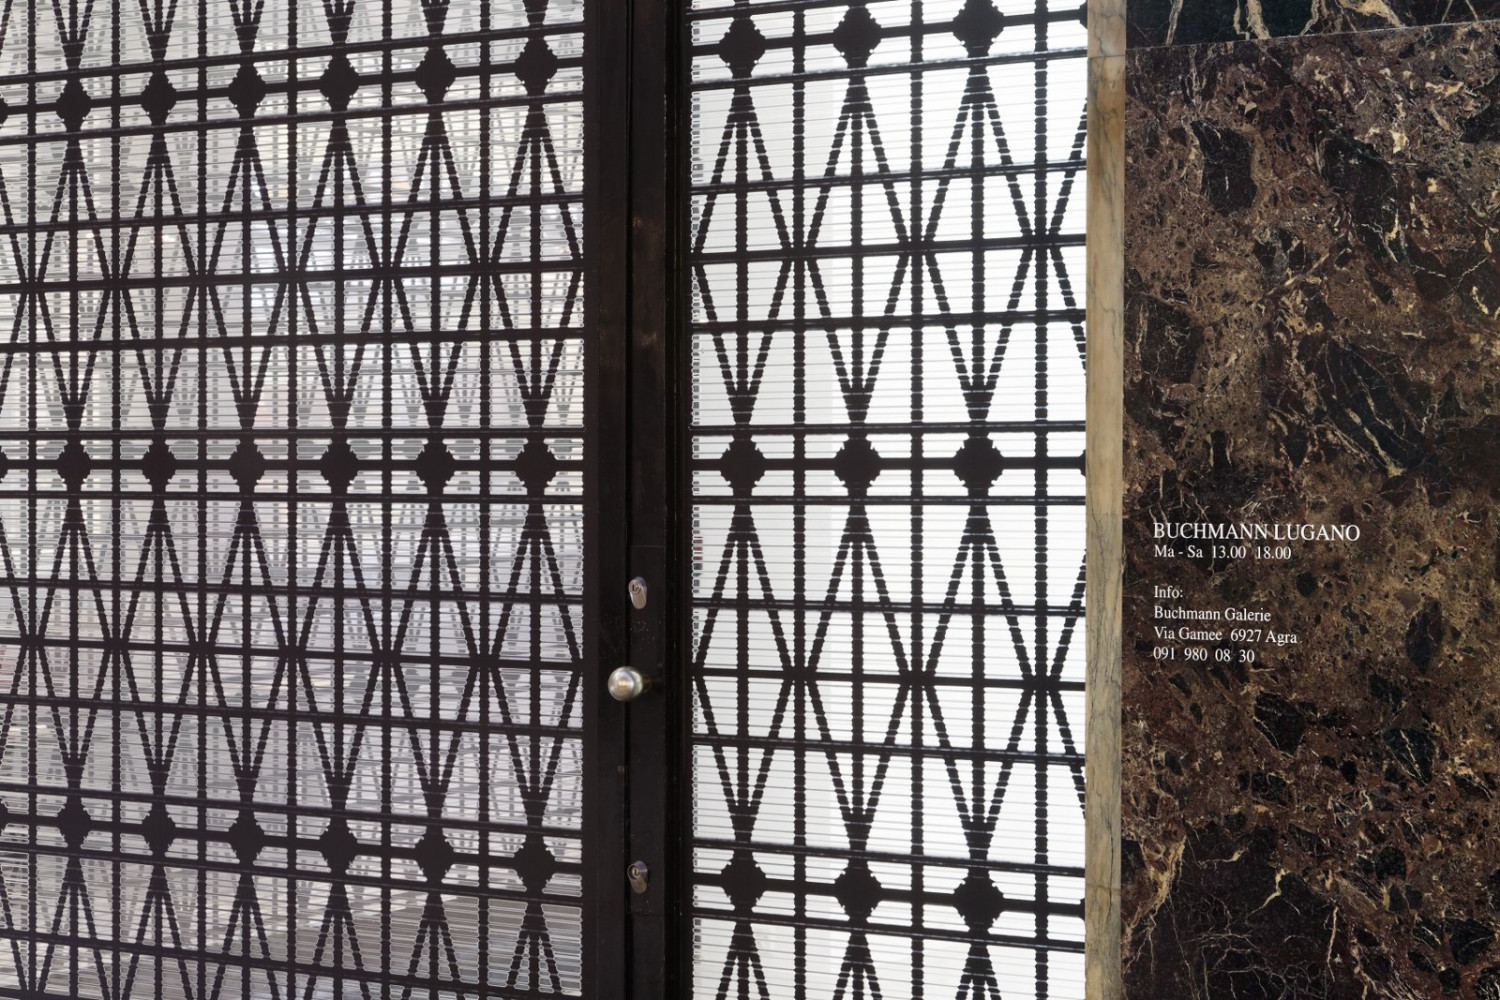 Bettina Pousttchi, ‘Curtain Wall (detail)’, Installationsansicht, Buchmann Lugano, 2015